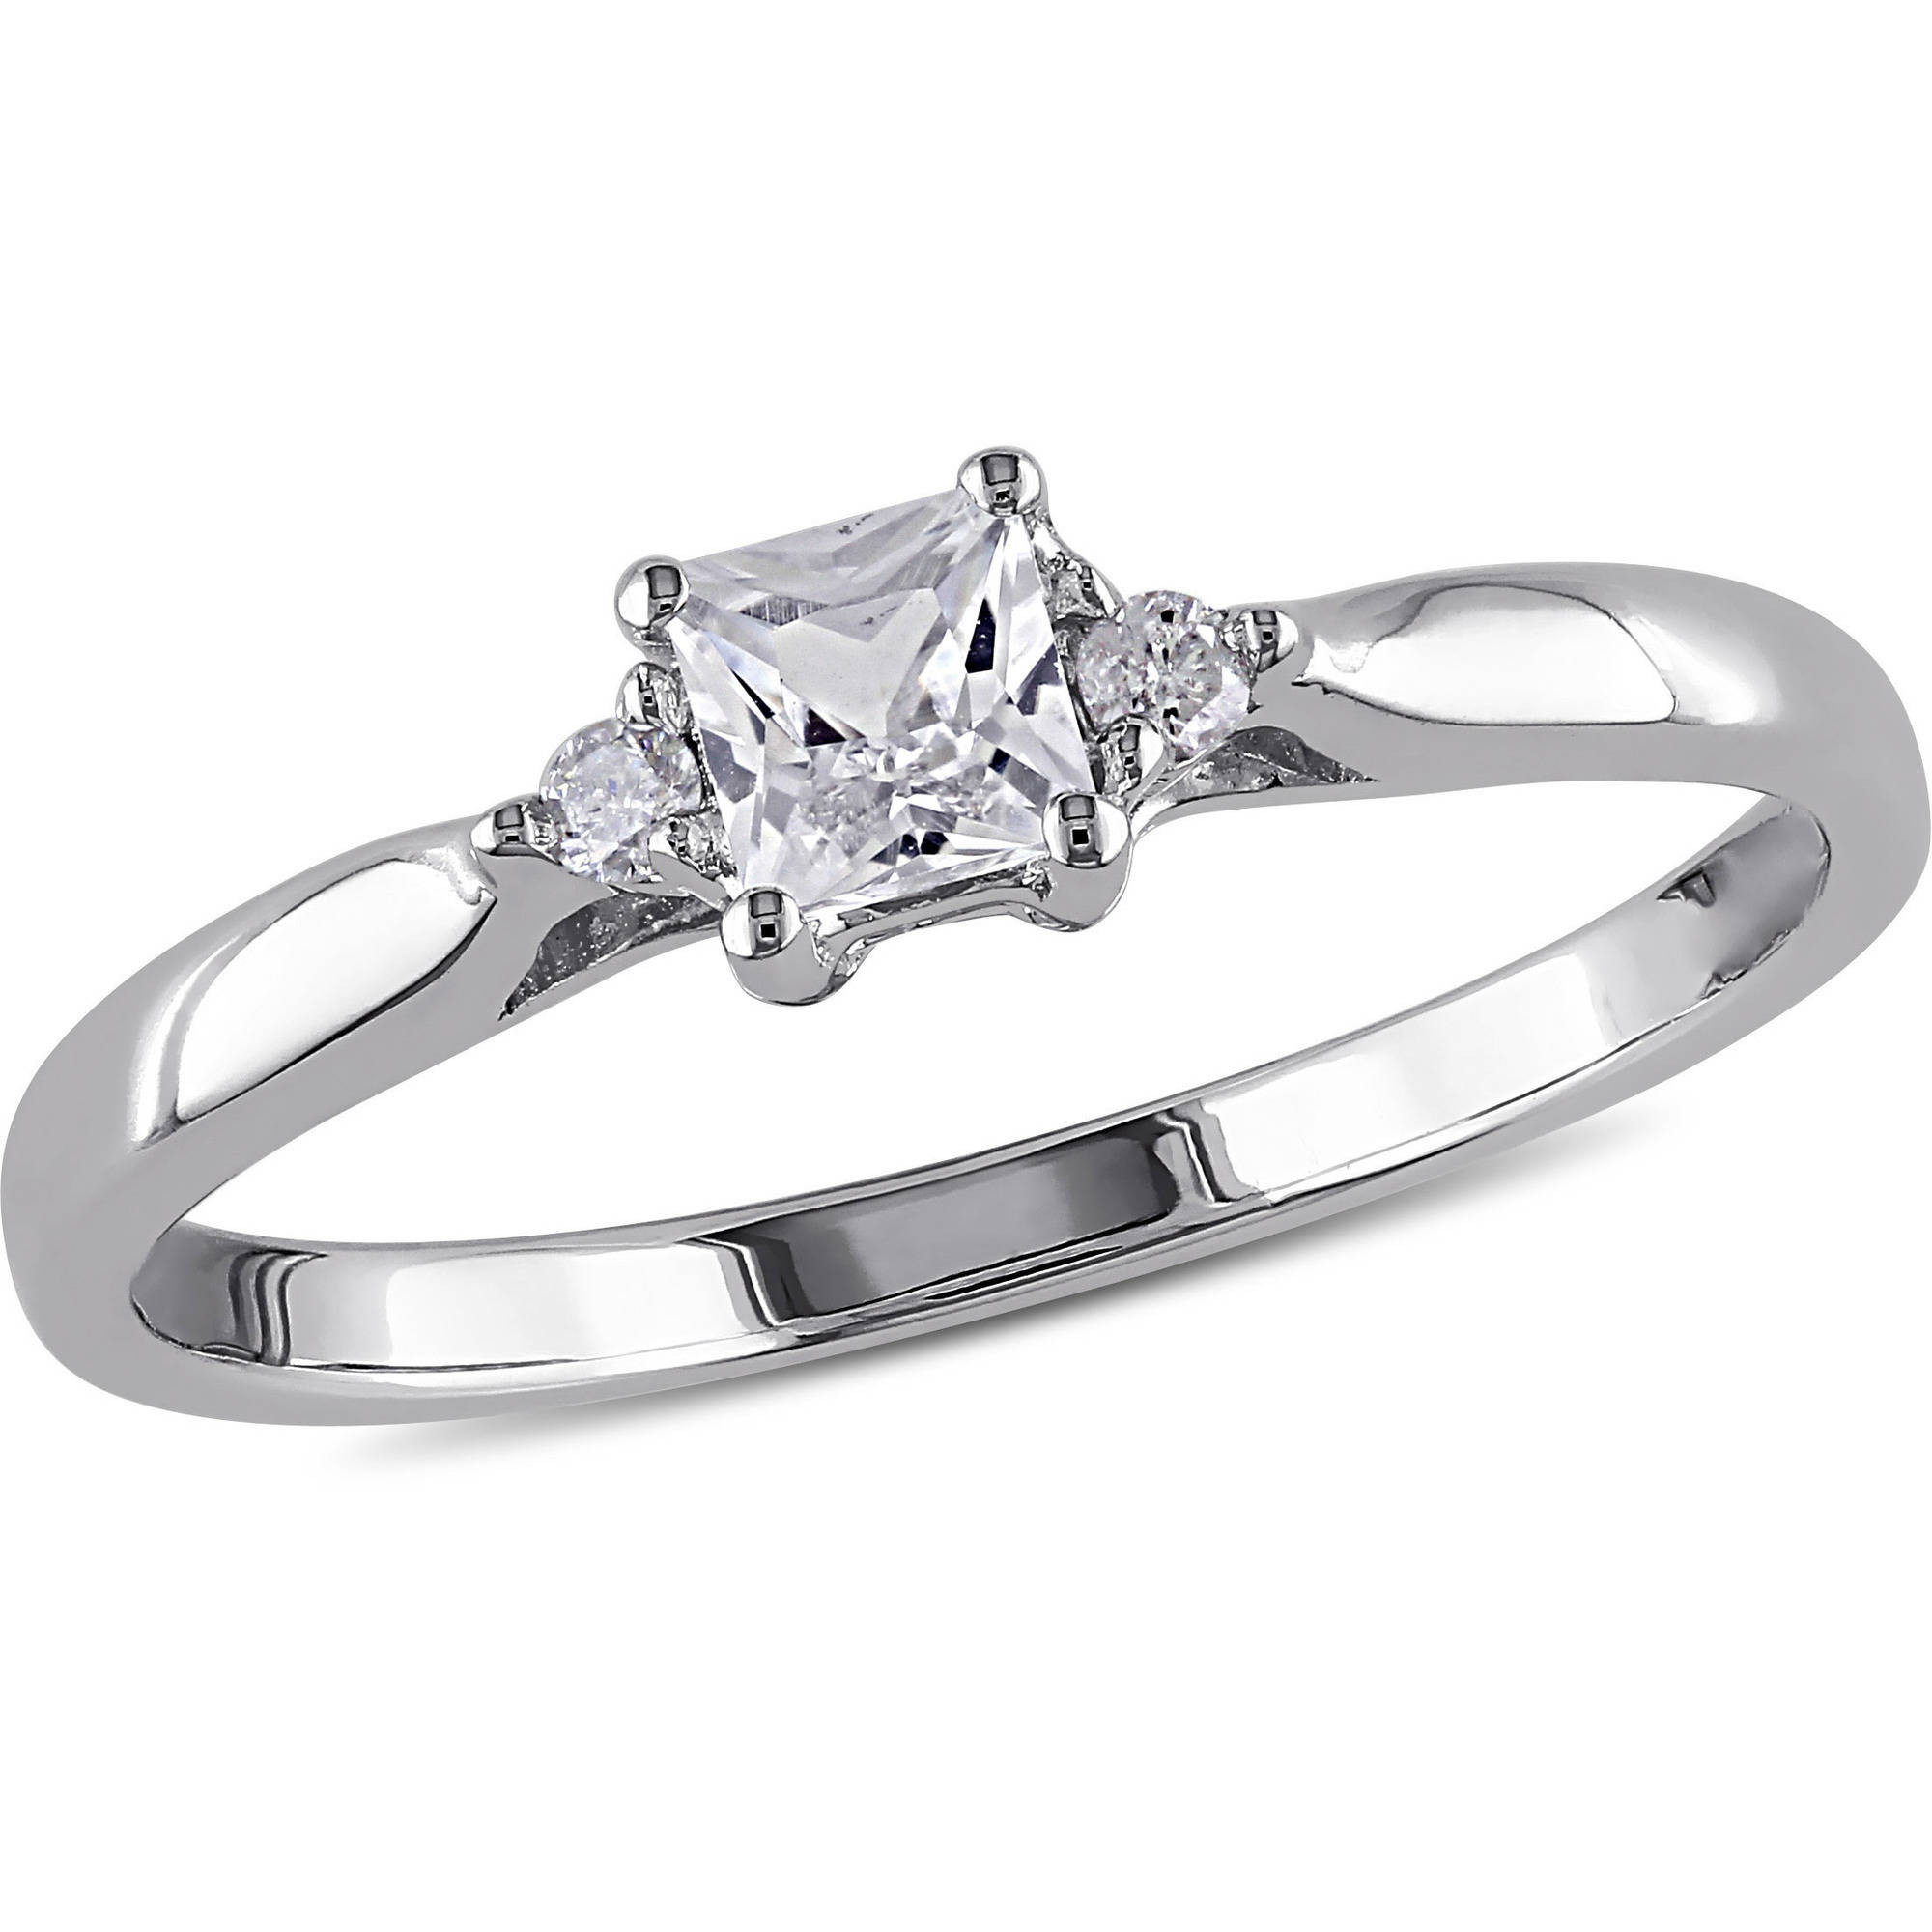 Princess Cut Diamond Promise Rings
 Miabella 1 3cttw Princess Cut Created White Sapphire and